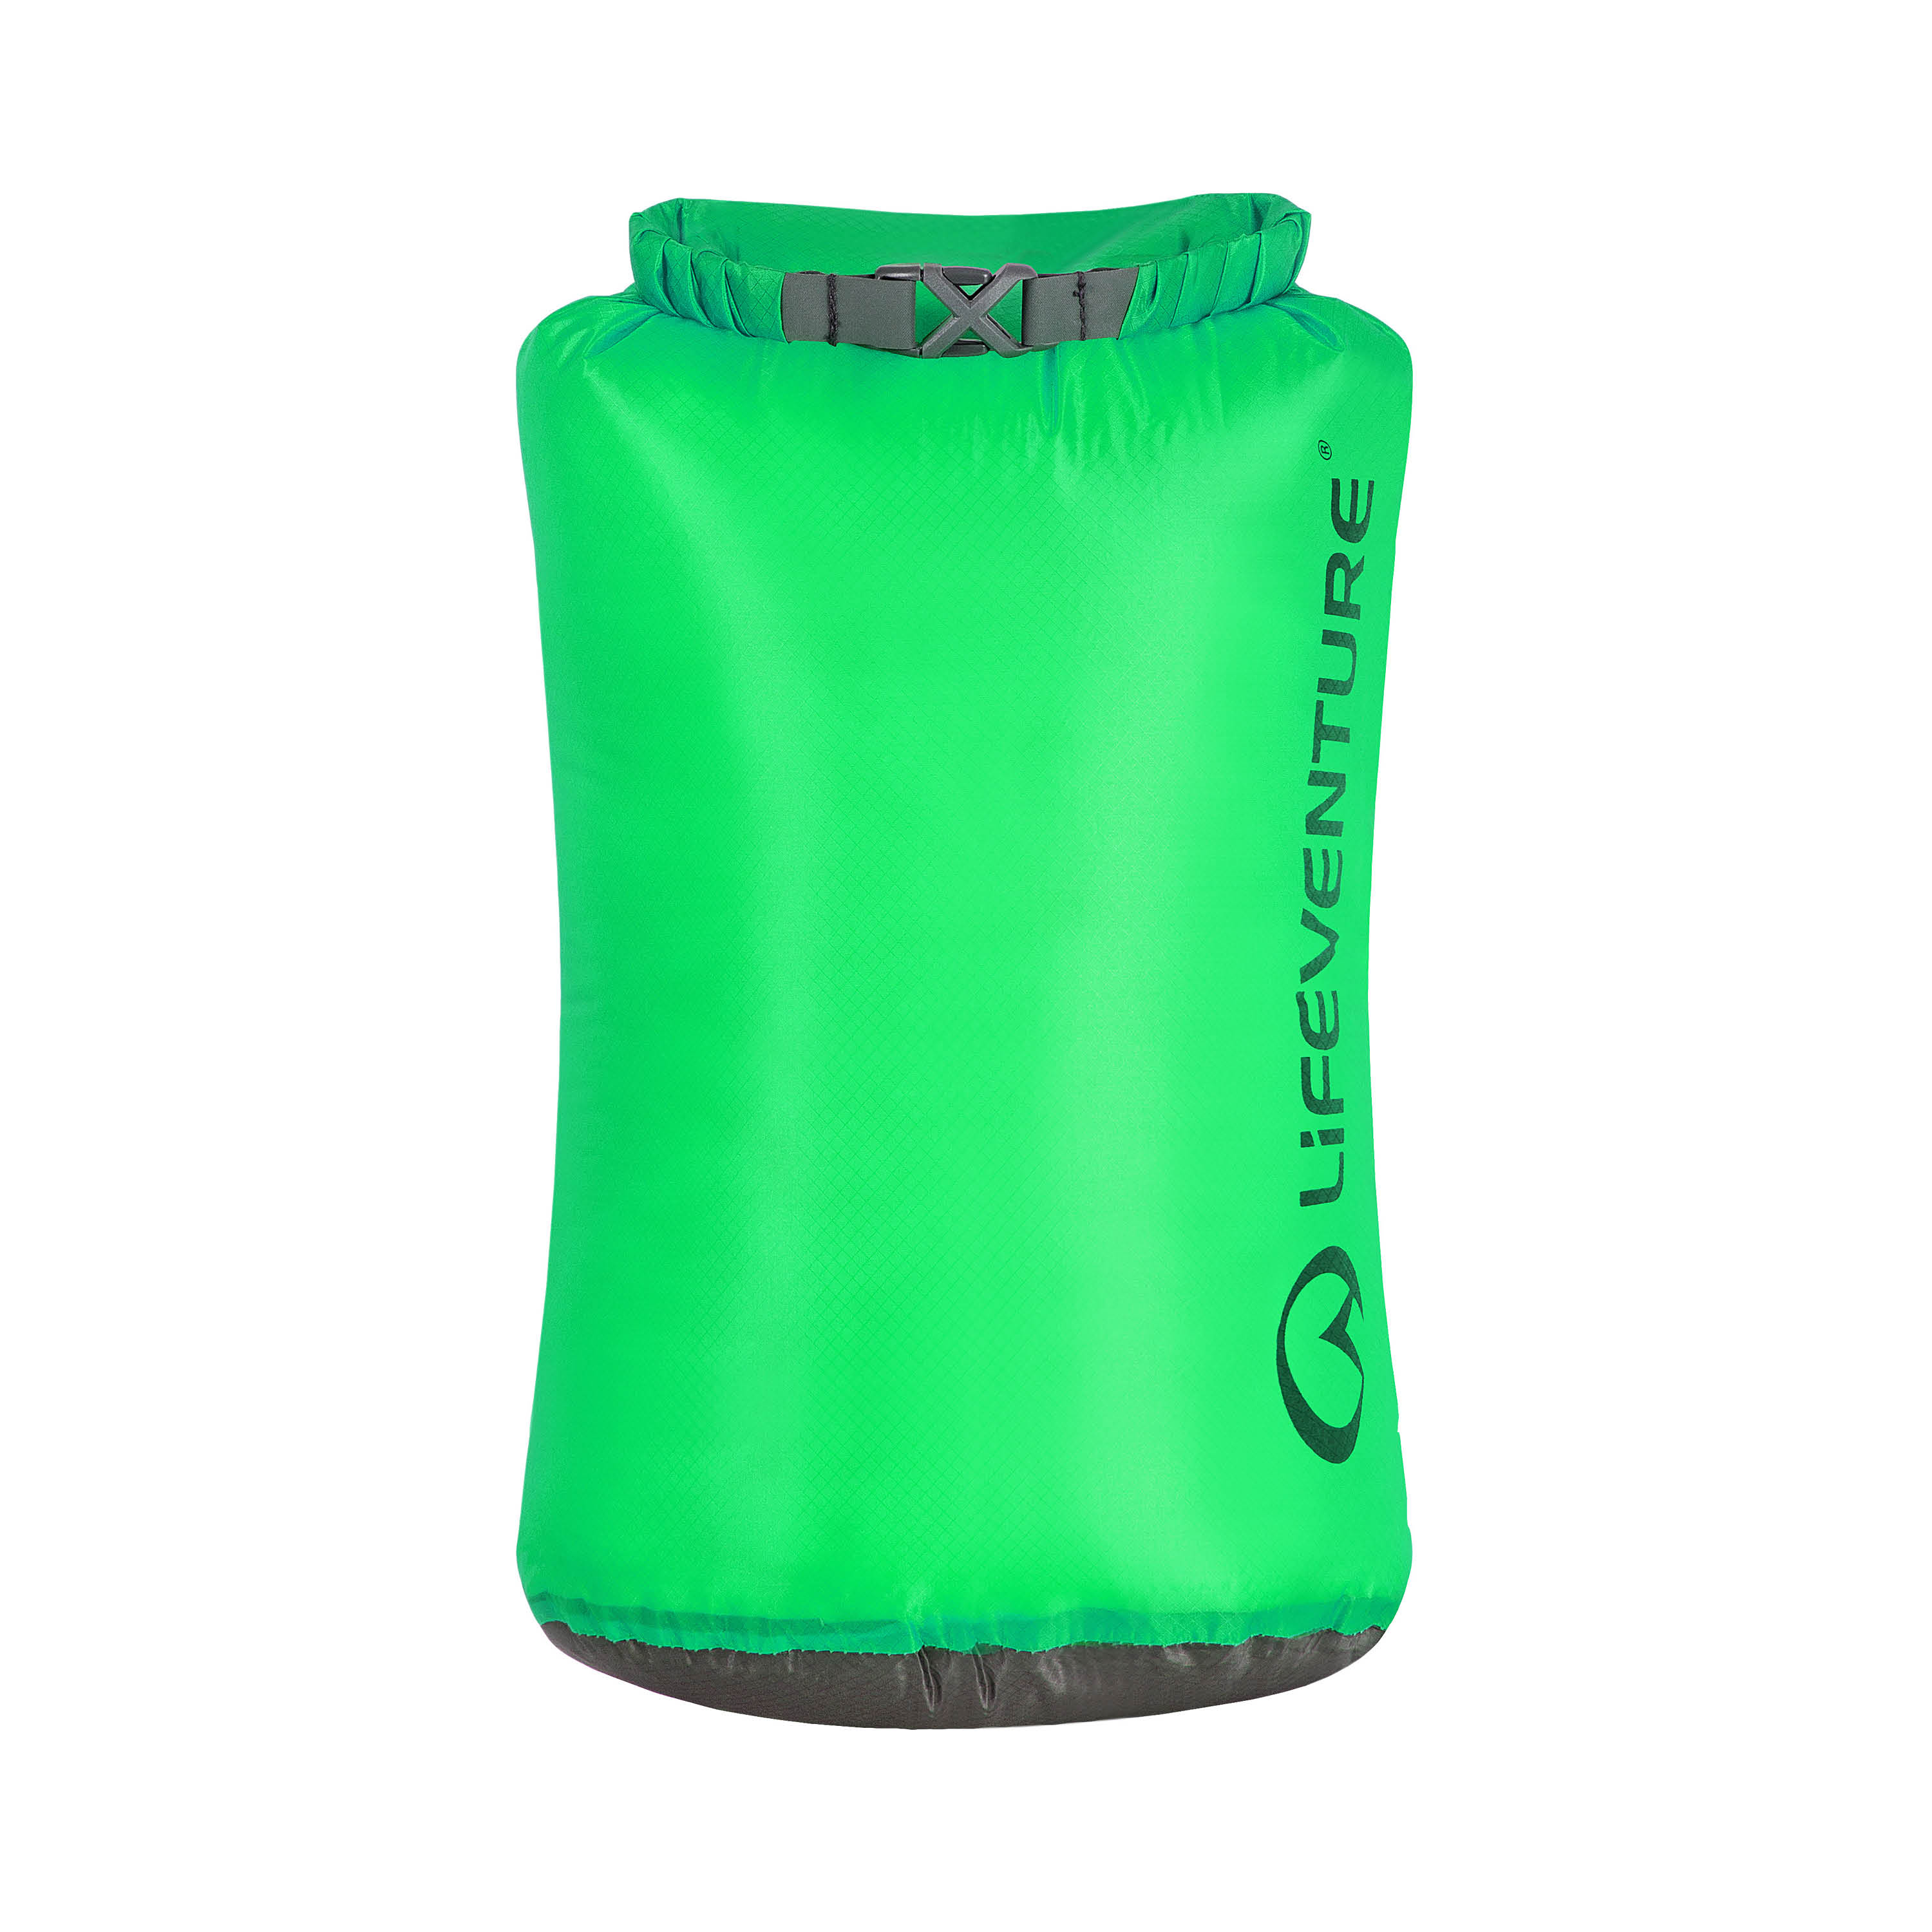 Lifeventure(r) Ultralight Dry Bag 10L